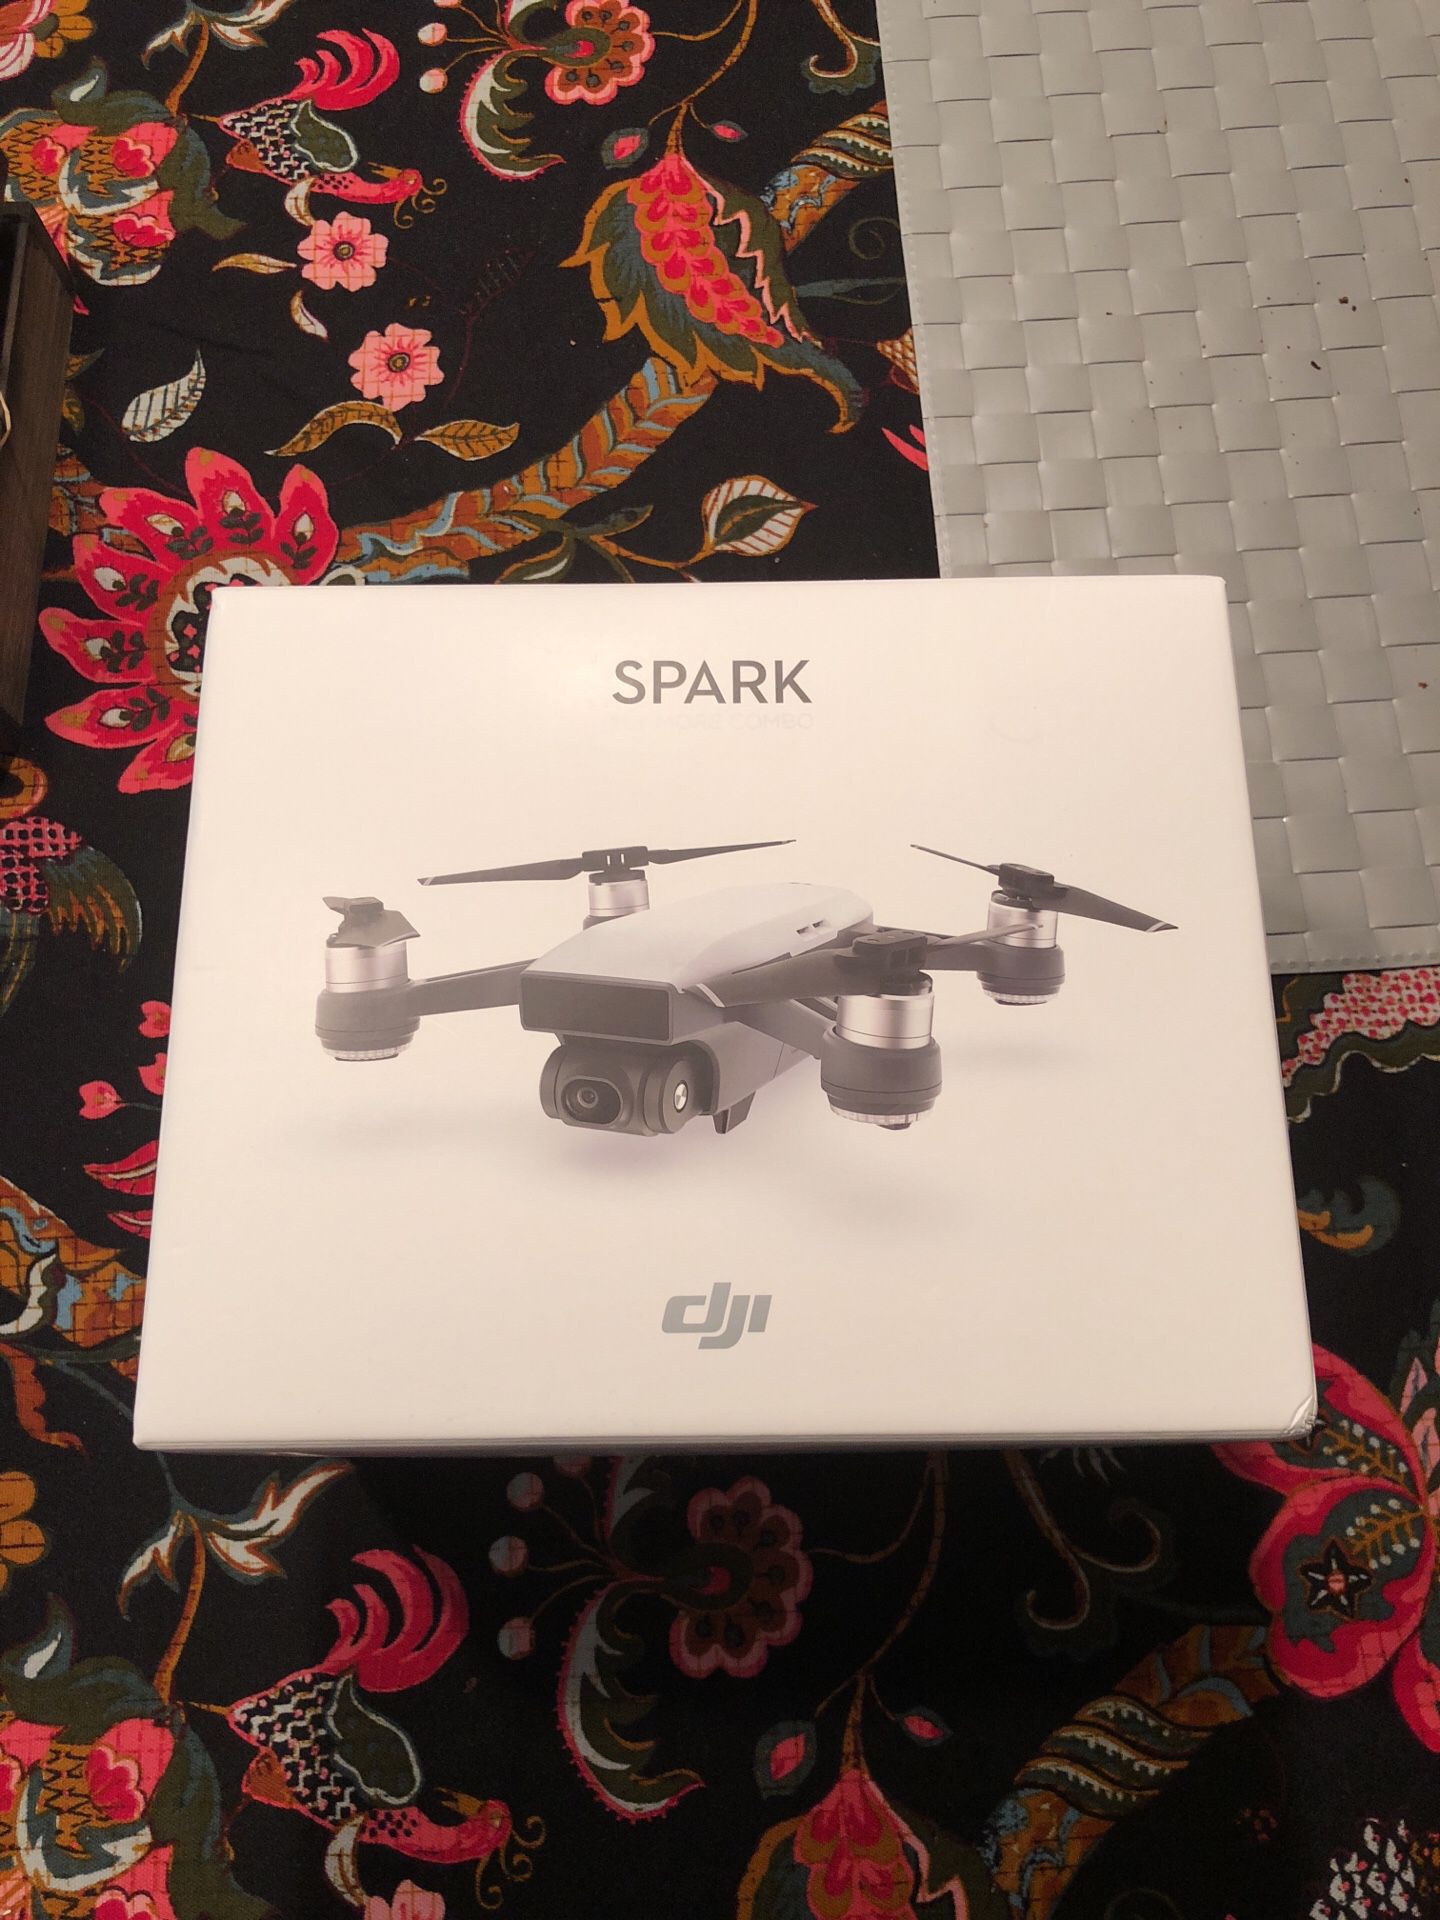 Spark Drone